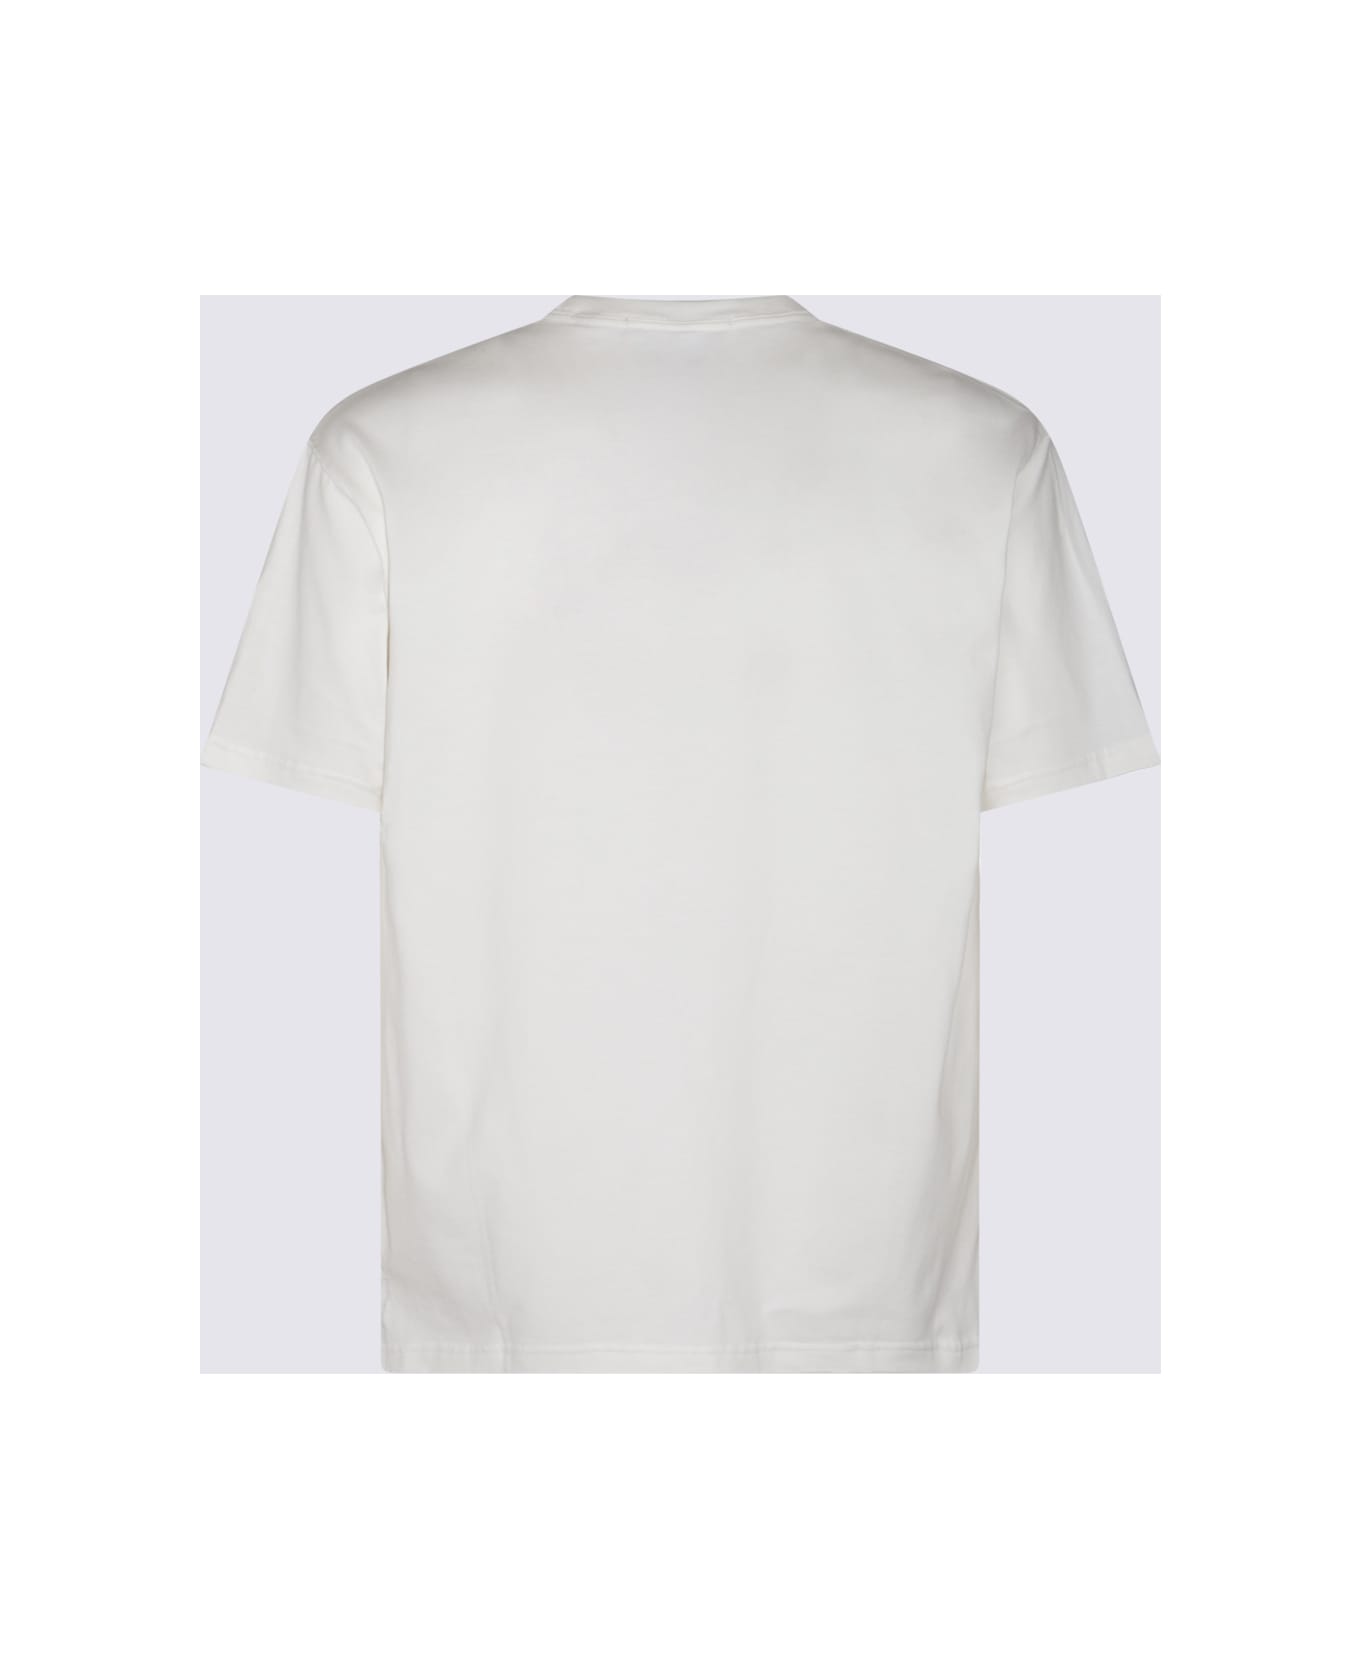 MASTERMIND WORLD White Cotton T-shirt - White